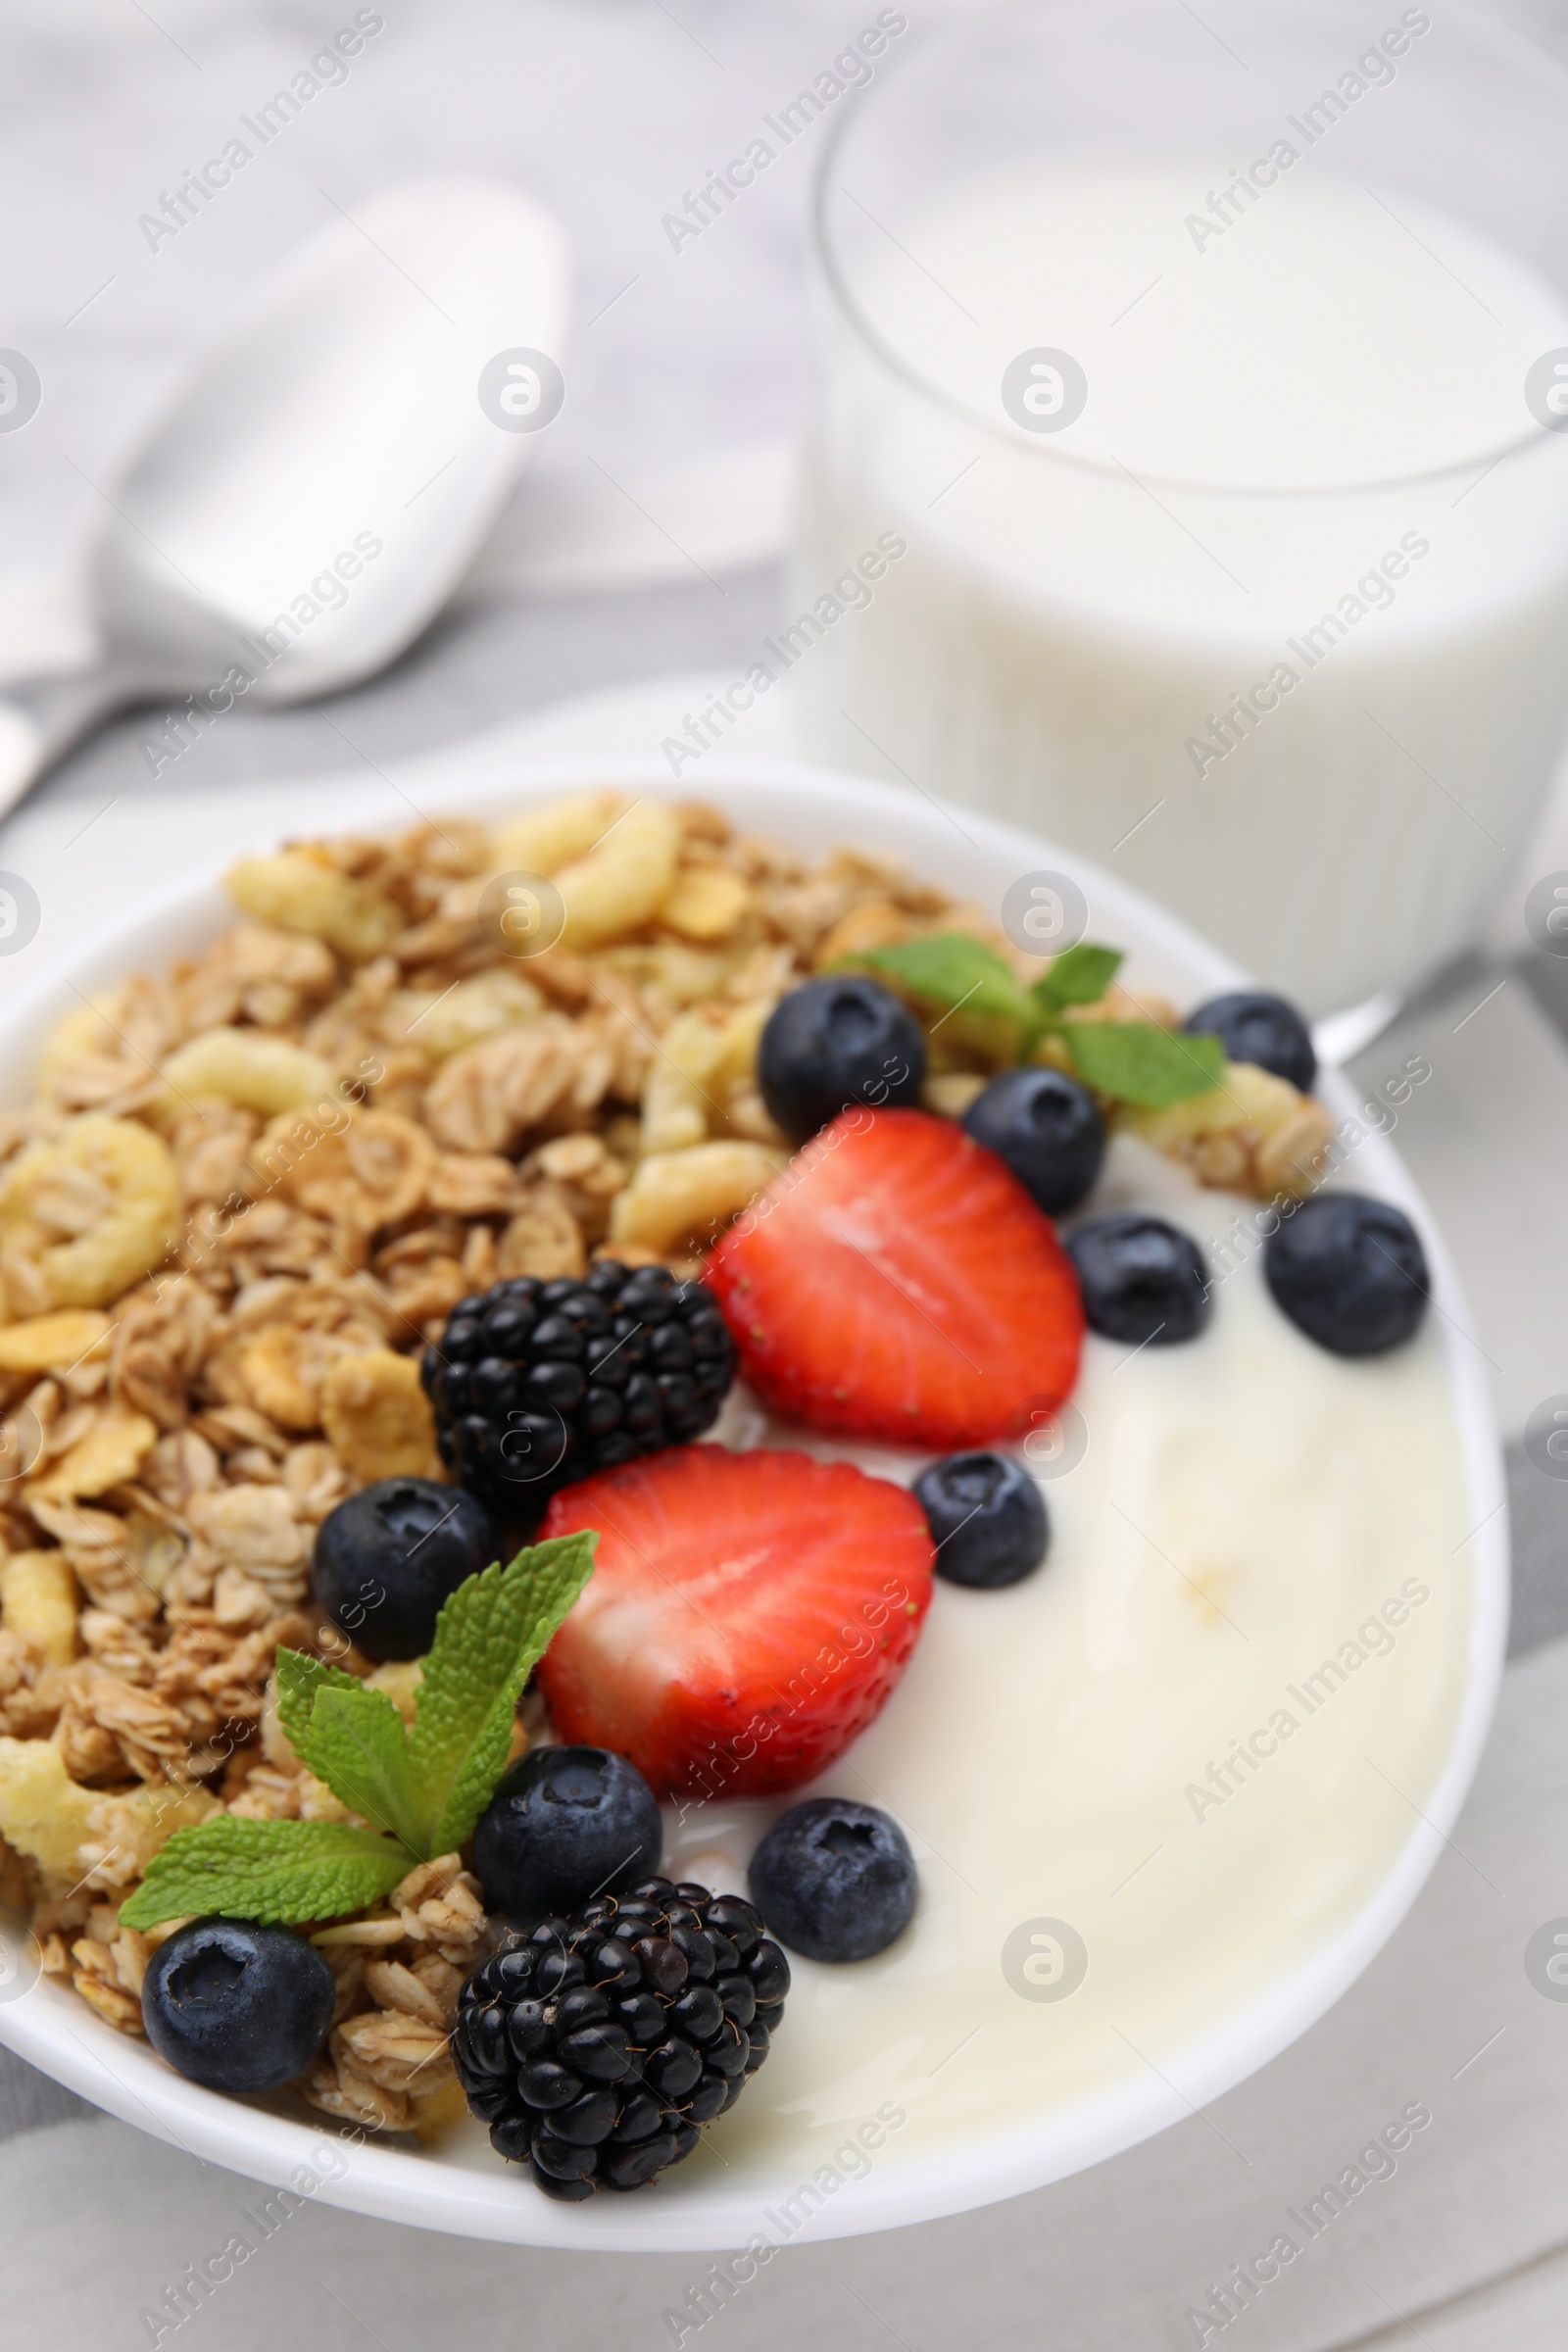 Photo of Tasty oatmeal, yogurt and fresh berries in bowl on table, closeup. Healthy breakfast